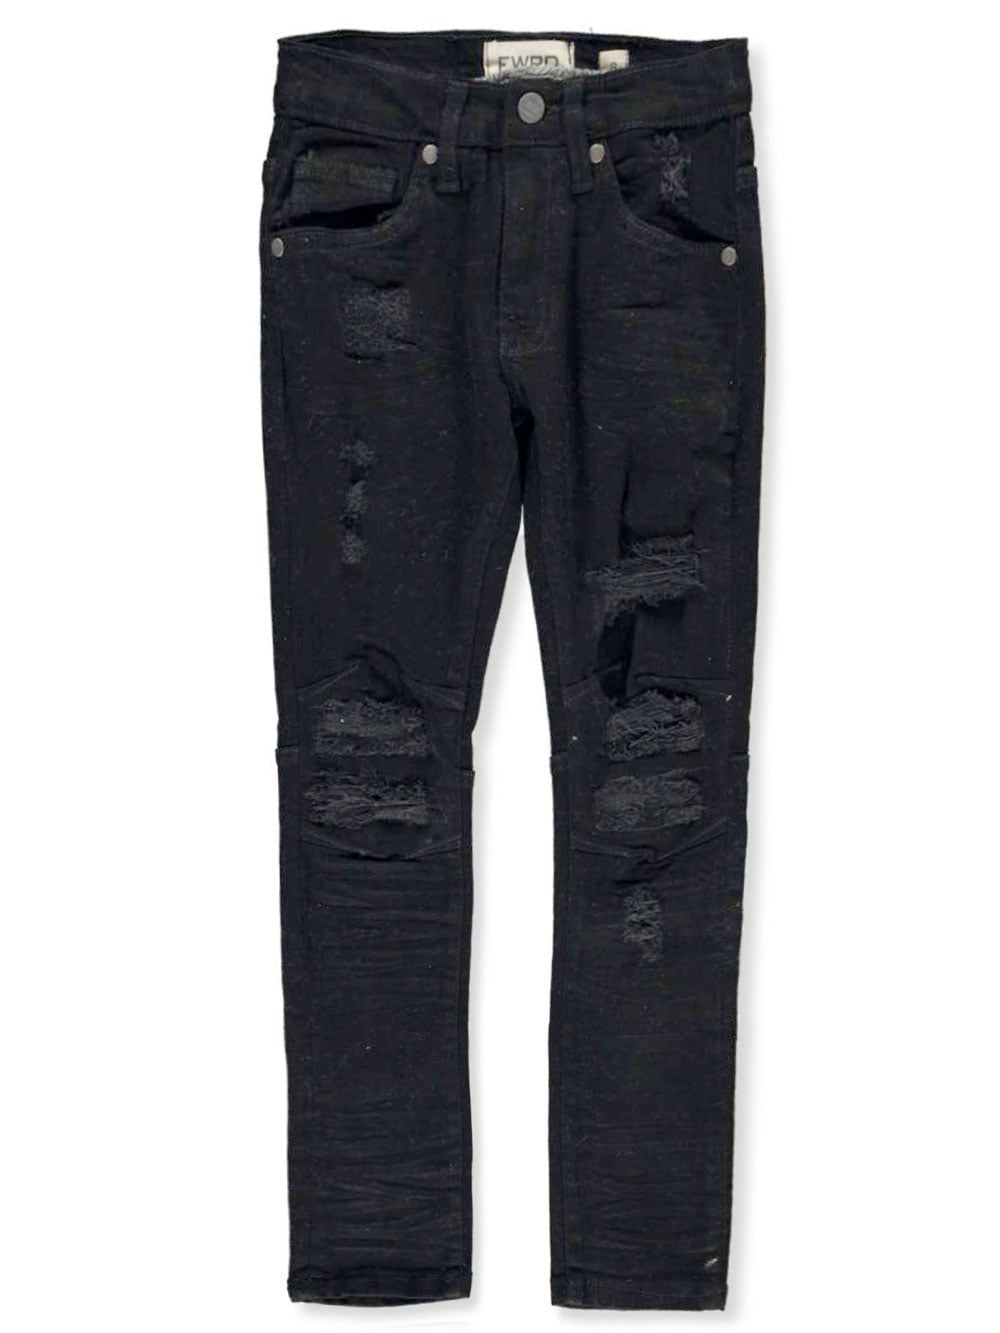 FWRD Boys' Rip Patch Skinny Jeans - jet black, 16 (Big Boys) - Walmart.com